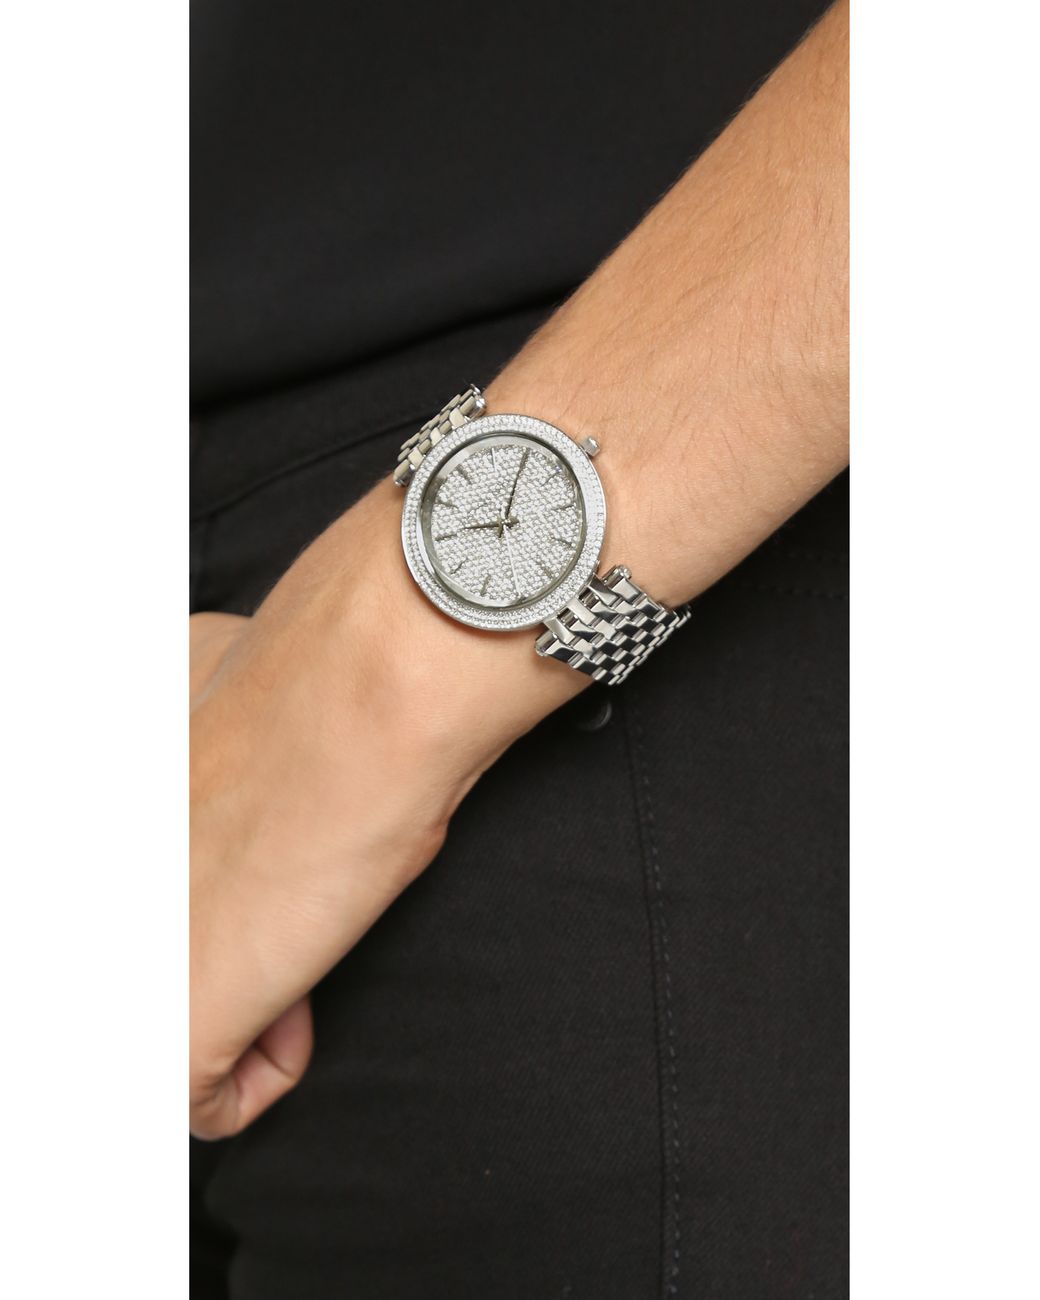 Michael Kors Darci Watch - Silver in Metallic | Lyst